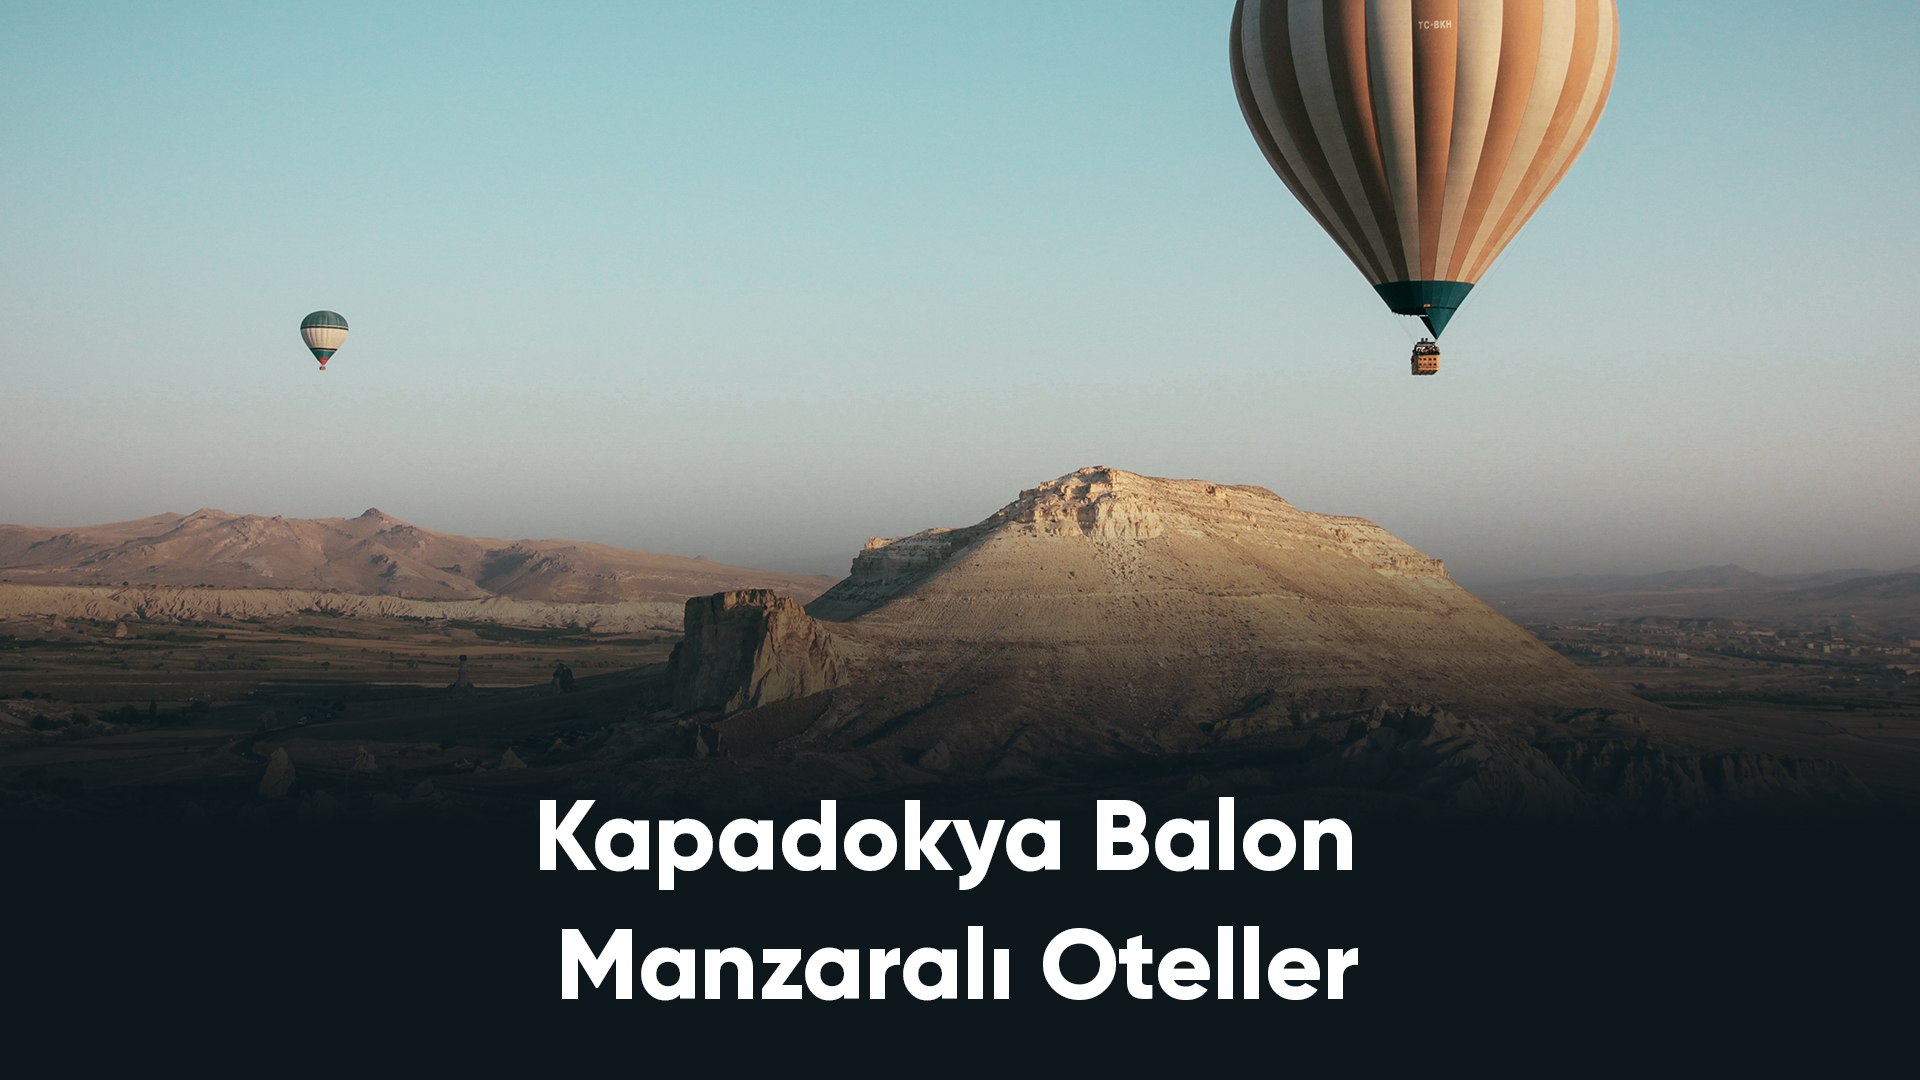 Kapadokya Balon Manzaralı Oteller